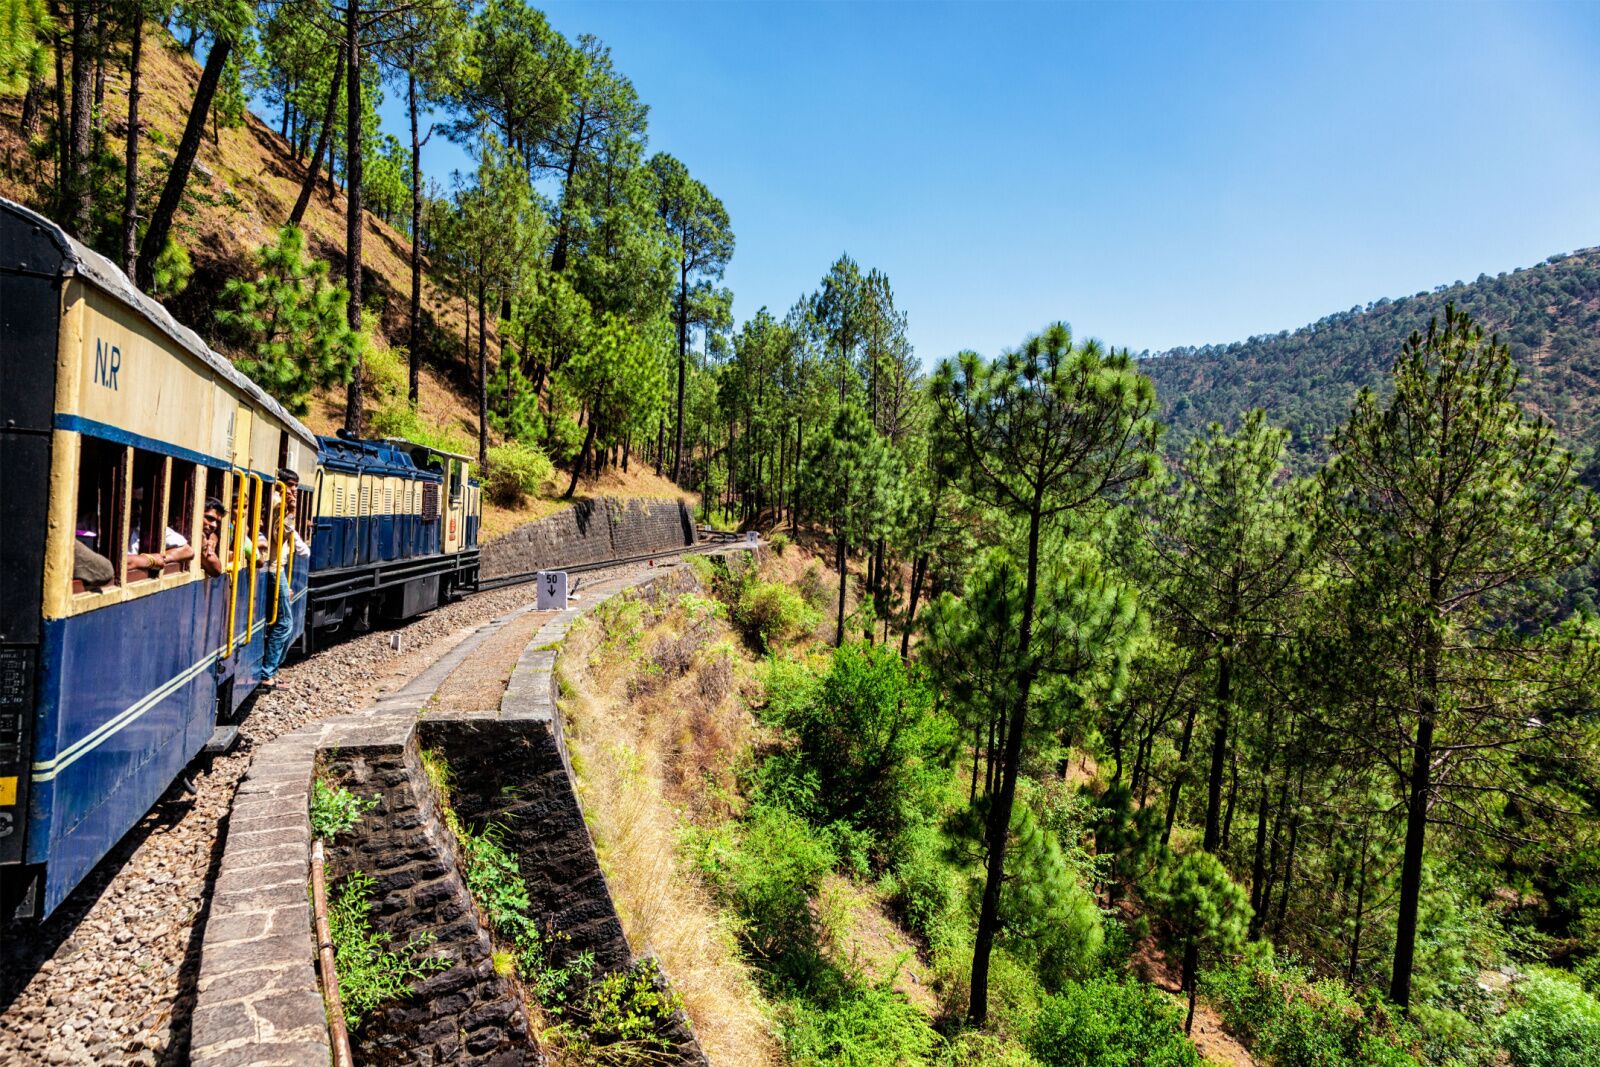 Indian railways - scenic northern train